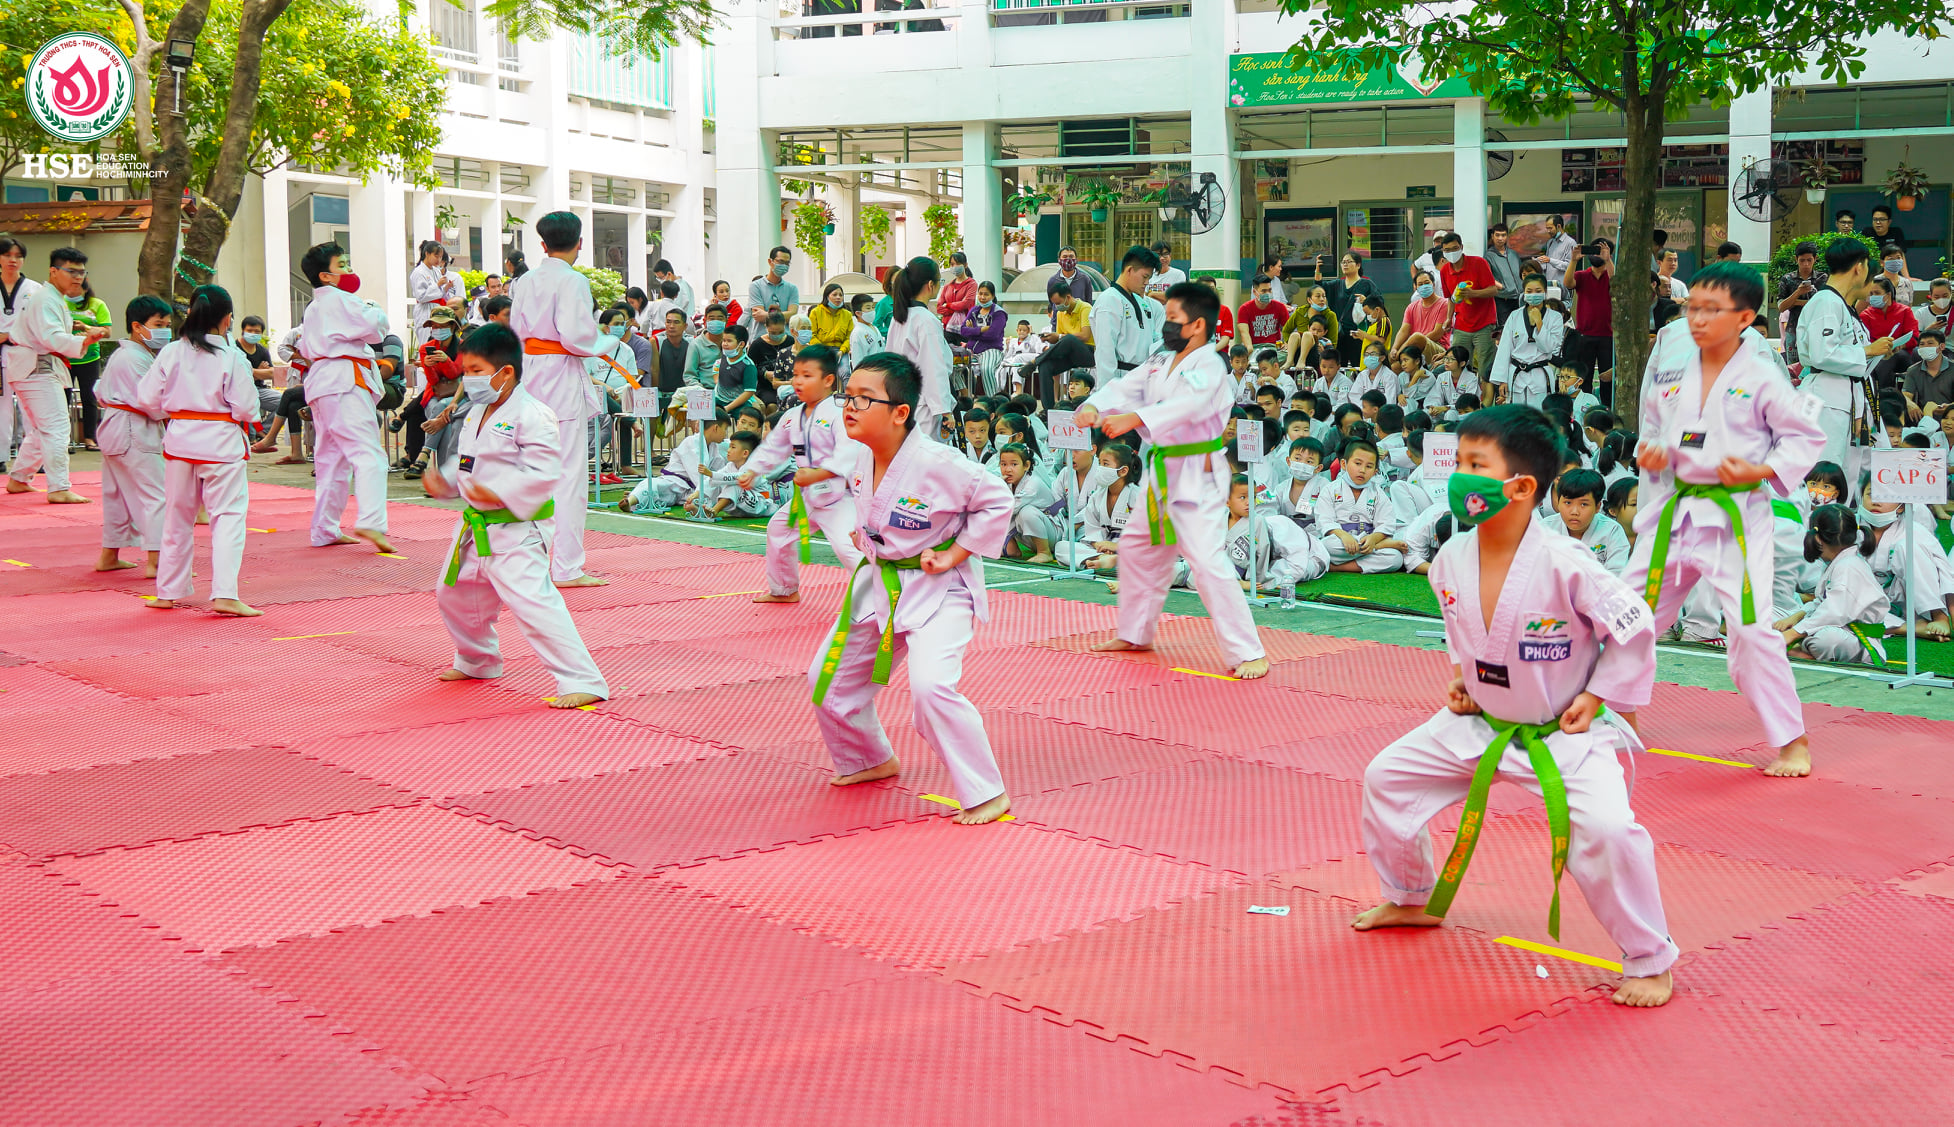 Trường Tiểu học - THCS - THPT HOA SEN - Taekwondo Tp. HCM